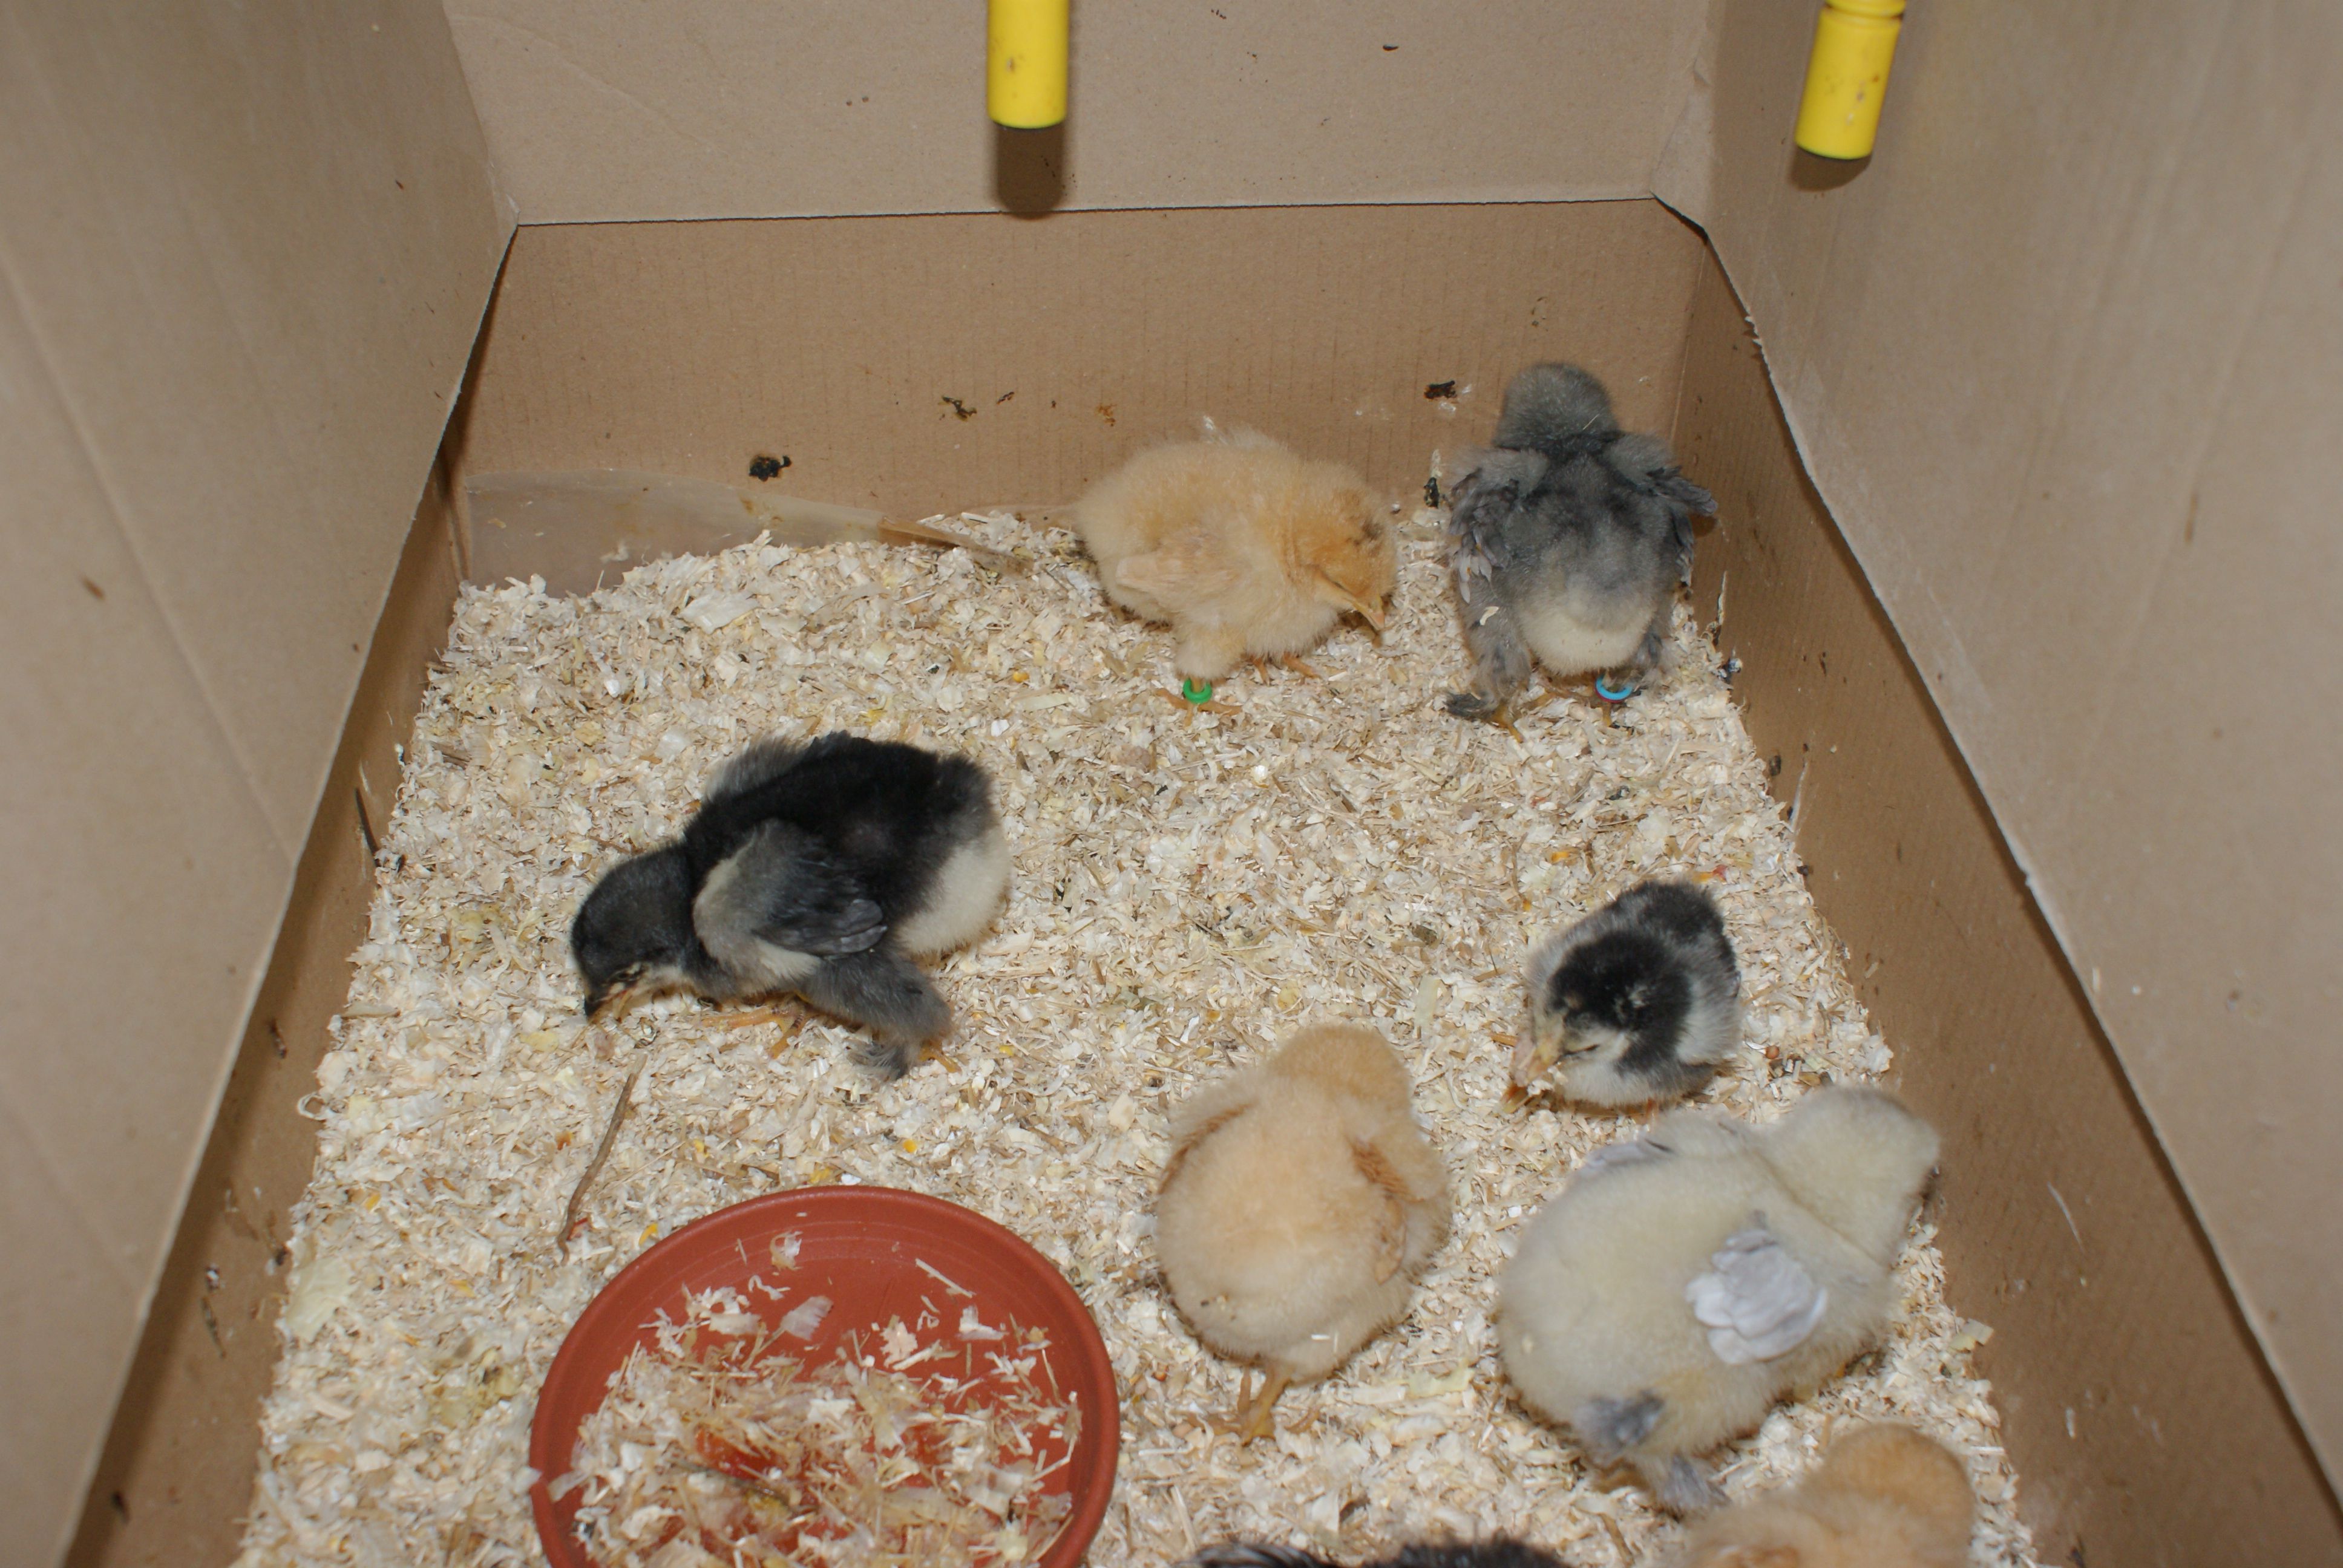 Baby chicks in a cardboard brooder